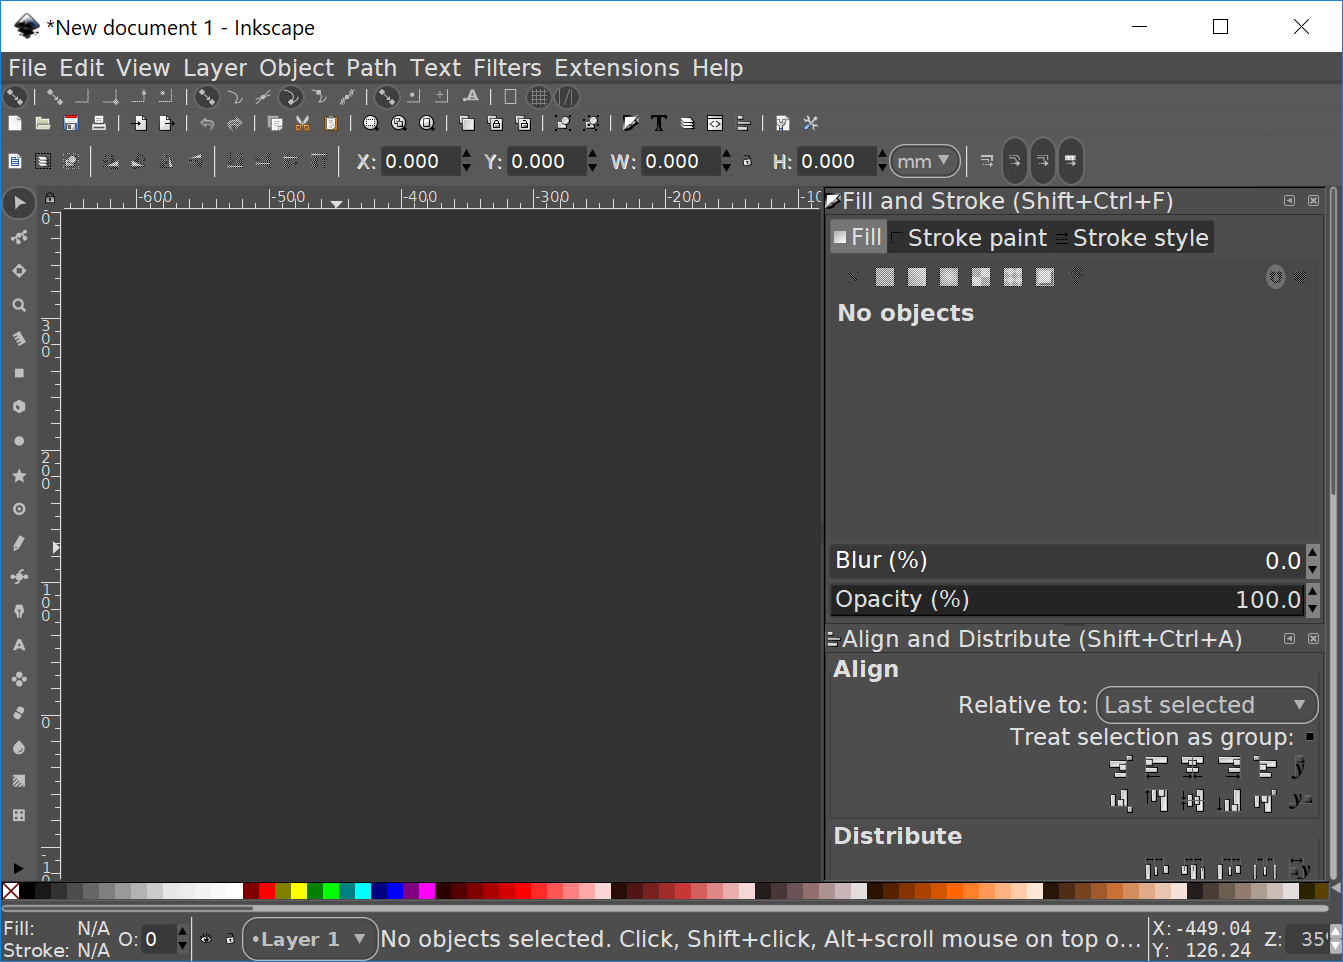 inkscape not compatible for mac sierra 10.13